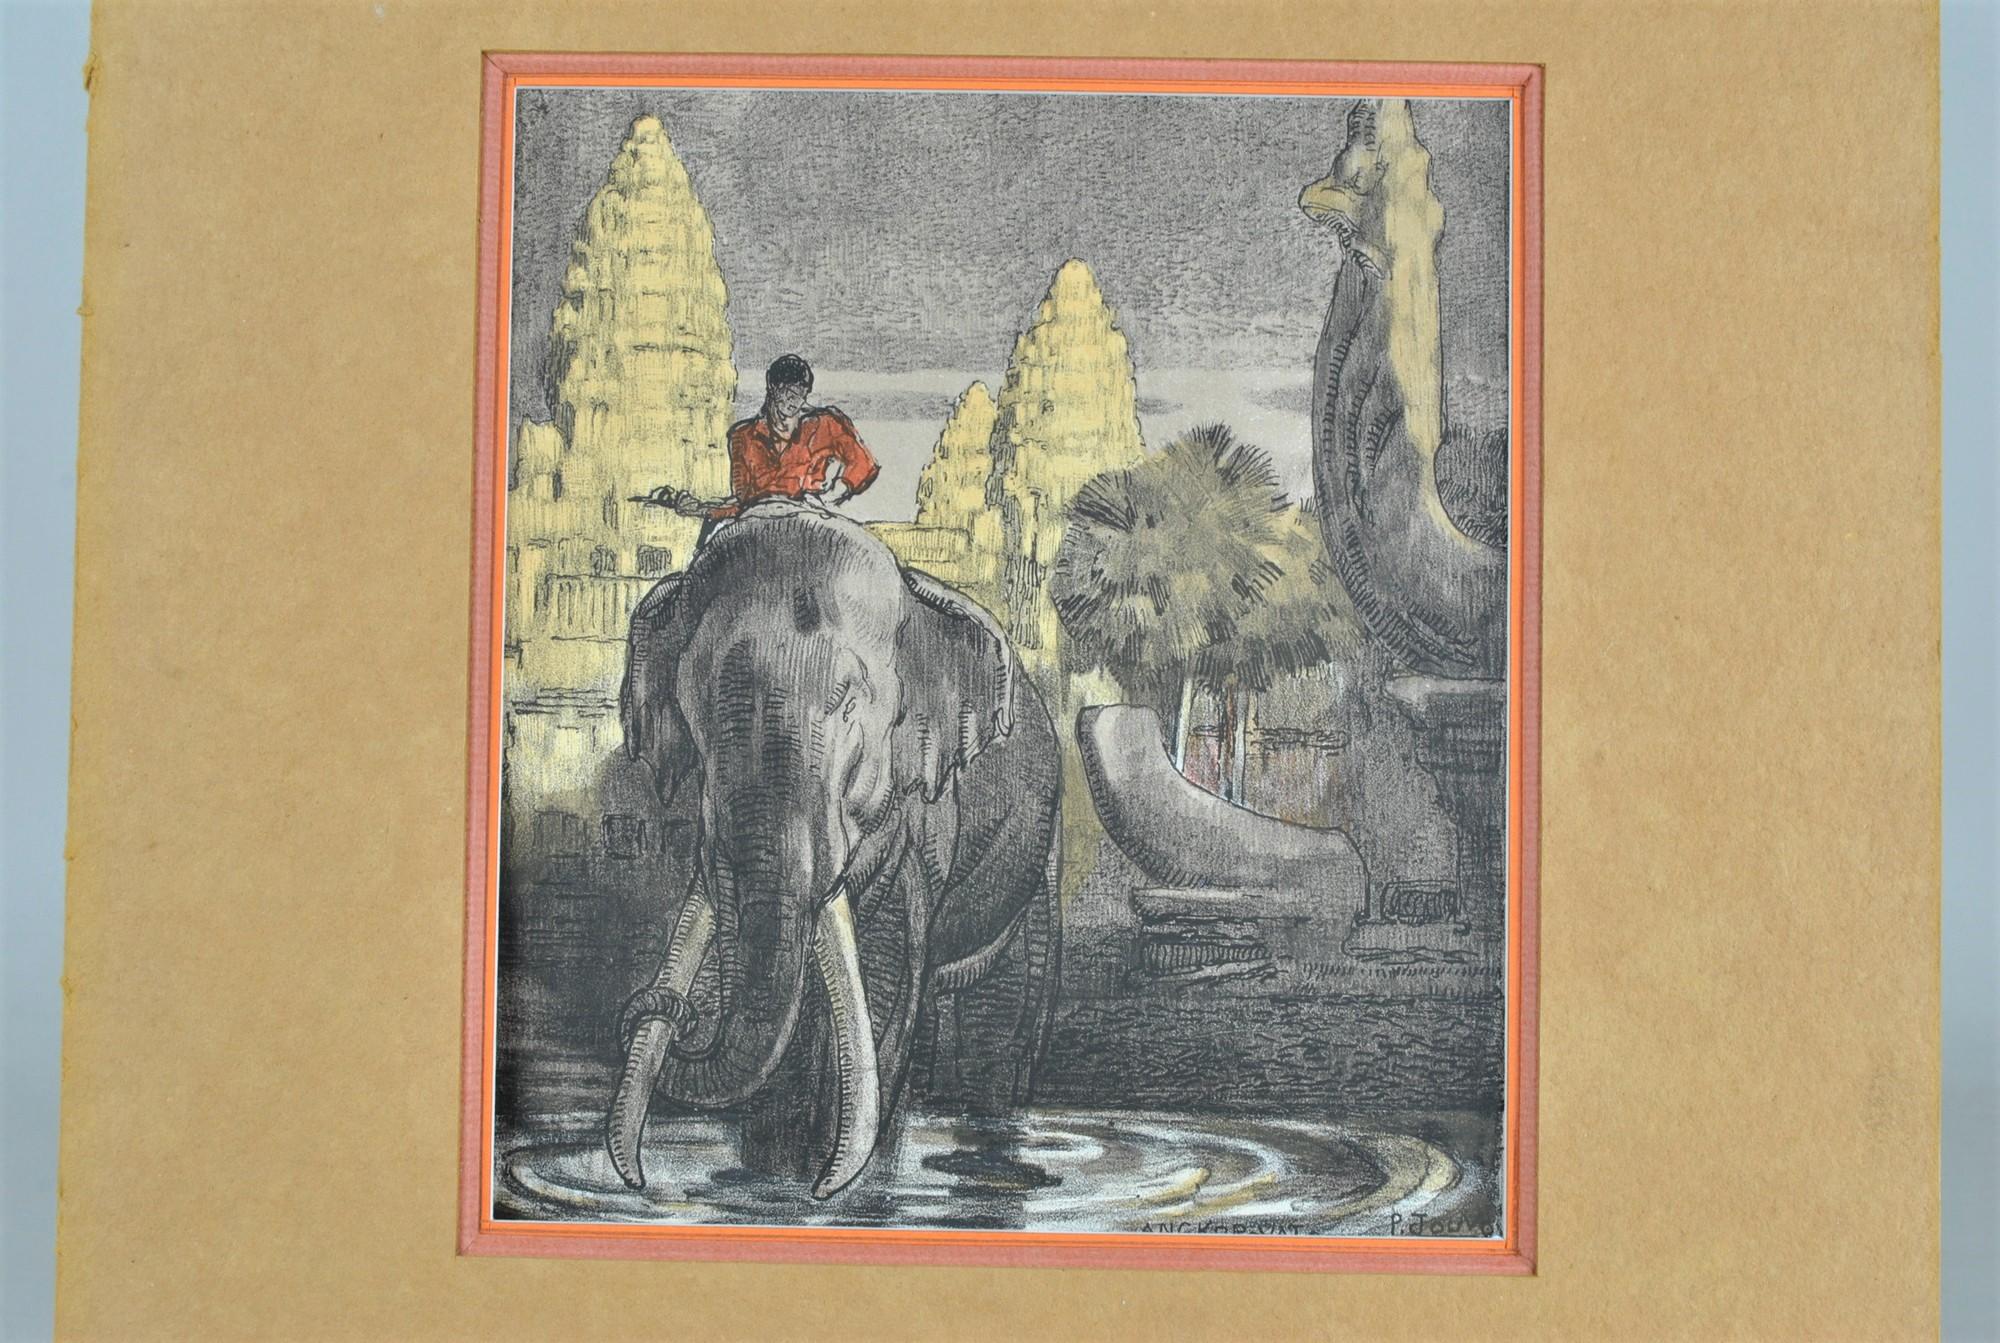 P Jouve, Angkor Wat, gerahmte Lithographie, XX. Jahrhundert (Französisch)